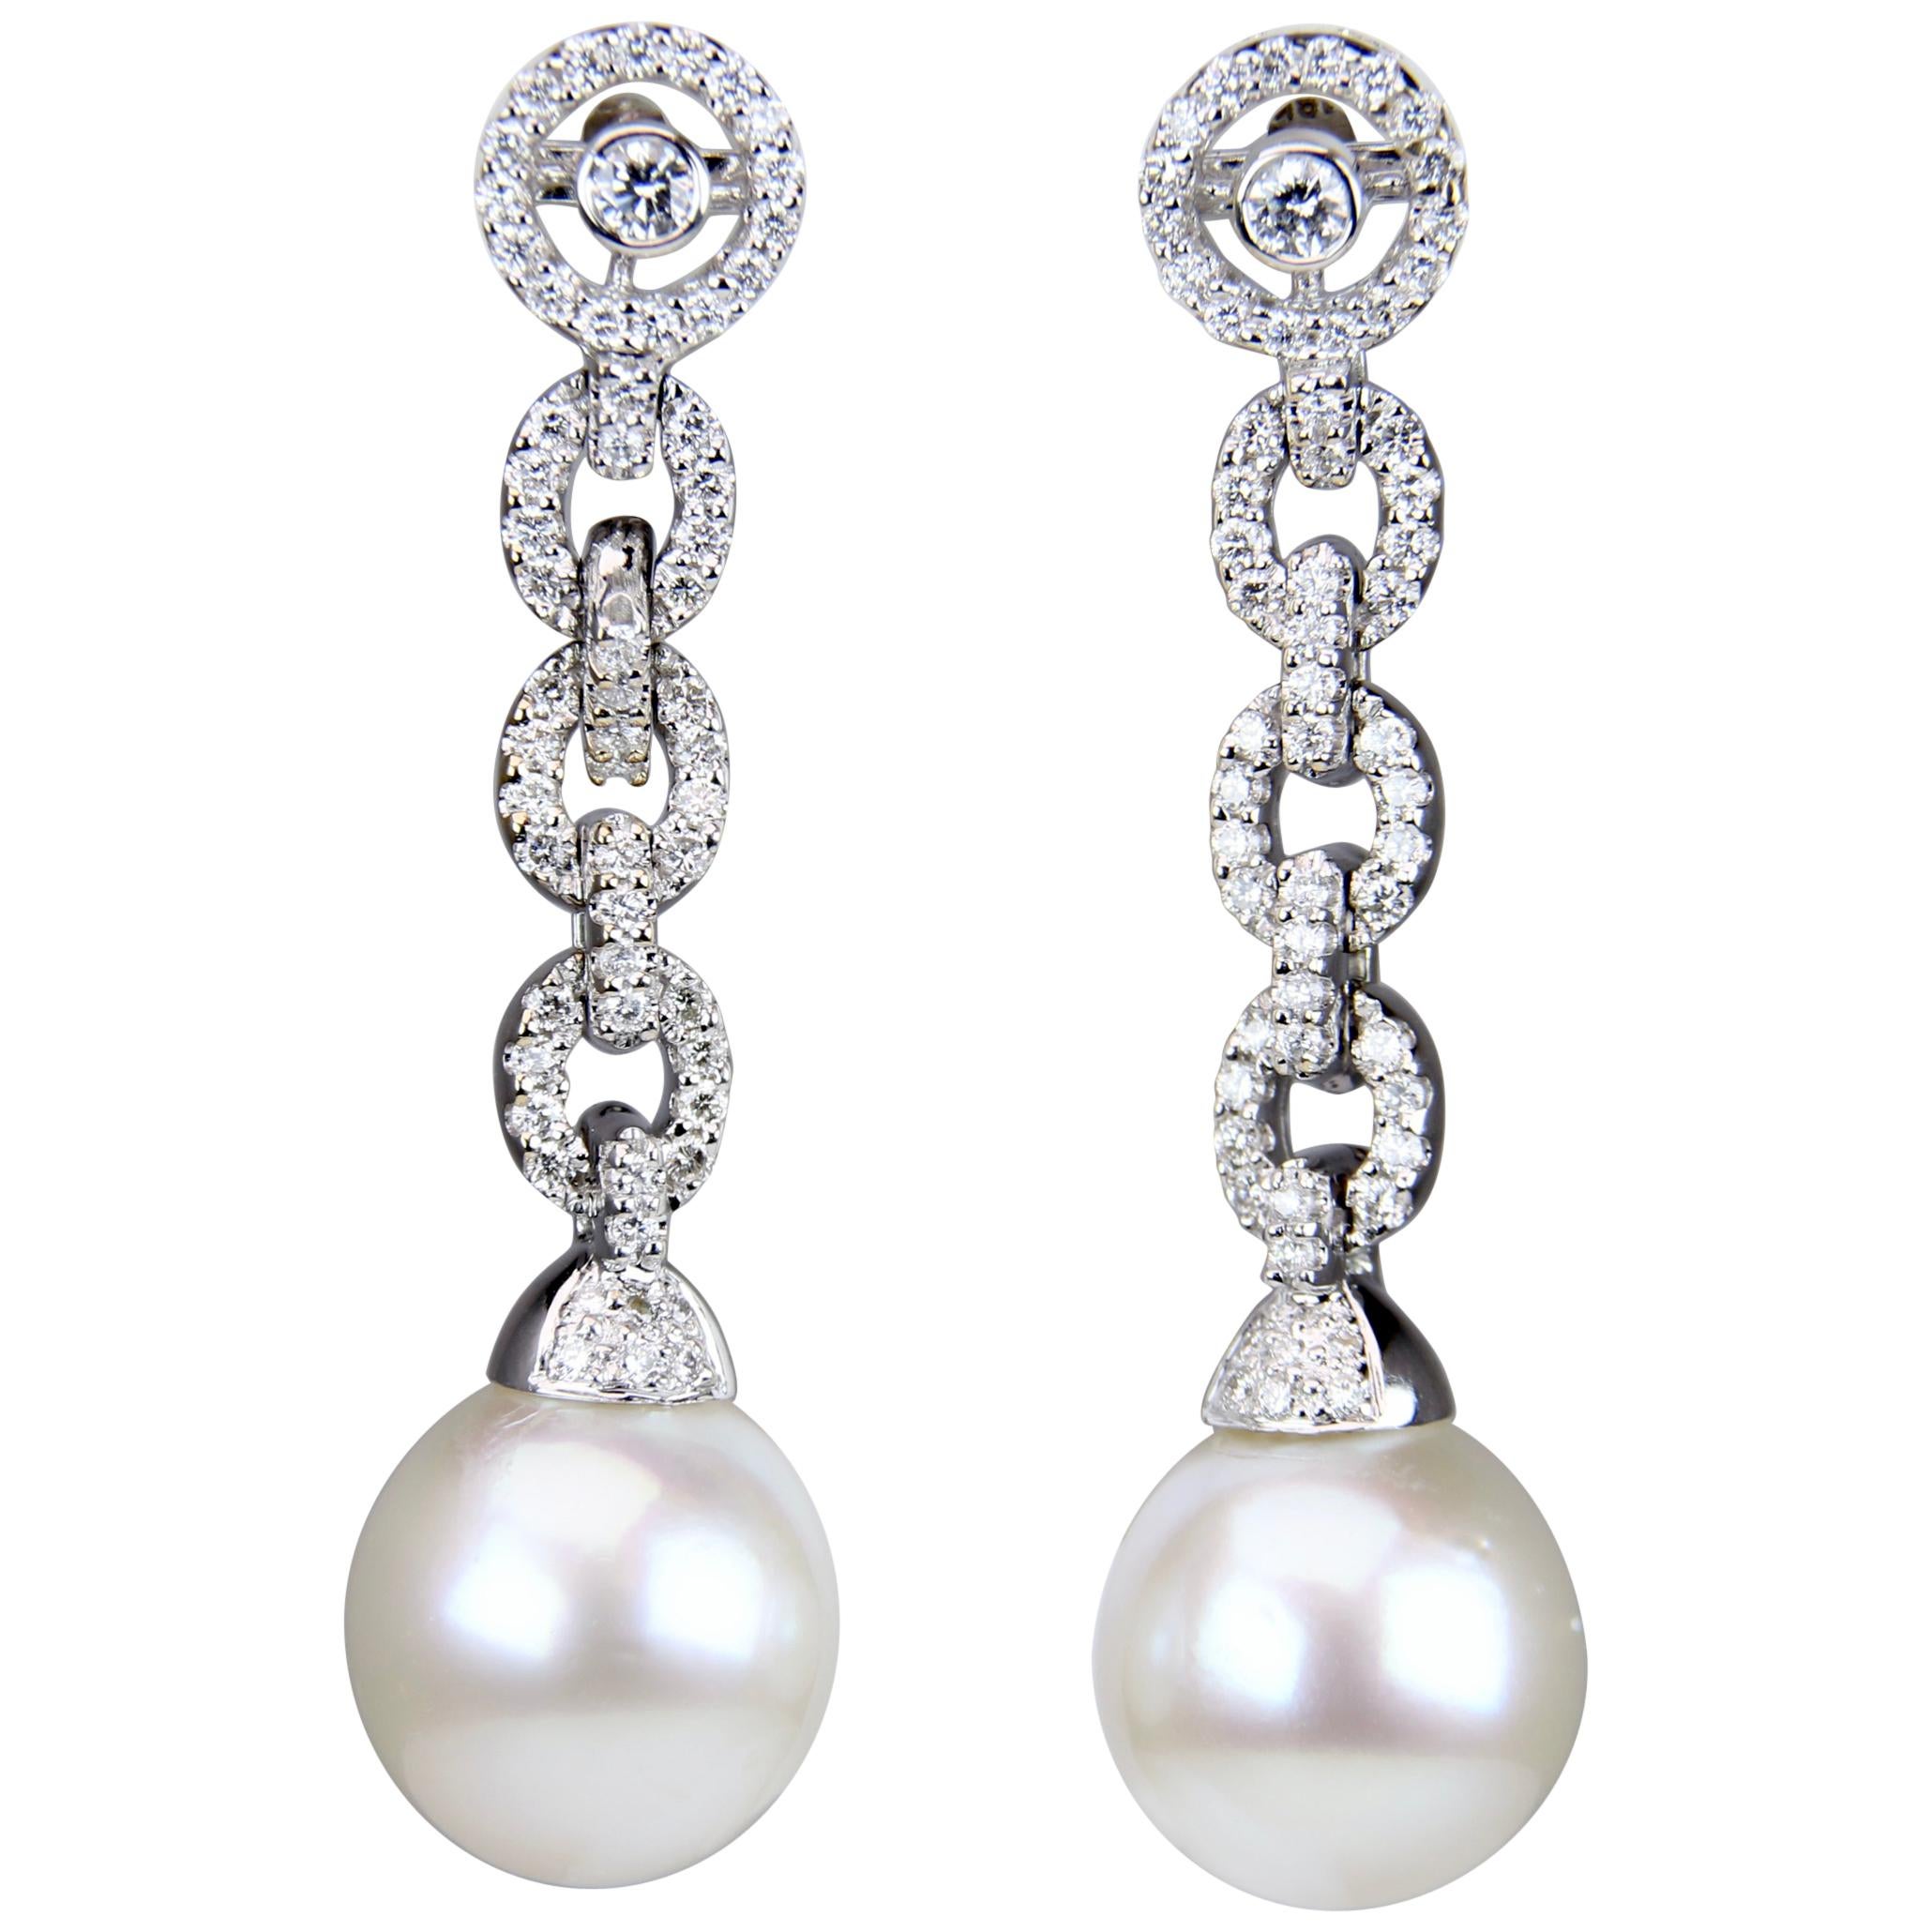 Assael 18 Karat White Gold South Sea Pearl and Diamond Dangle Earrings